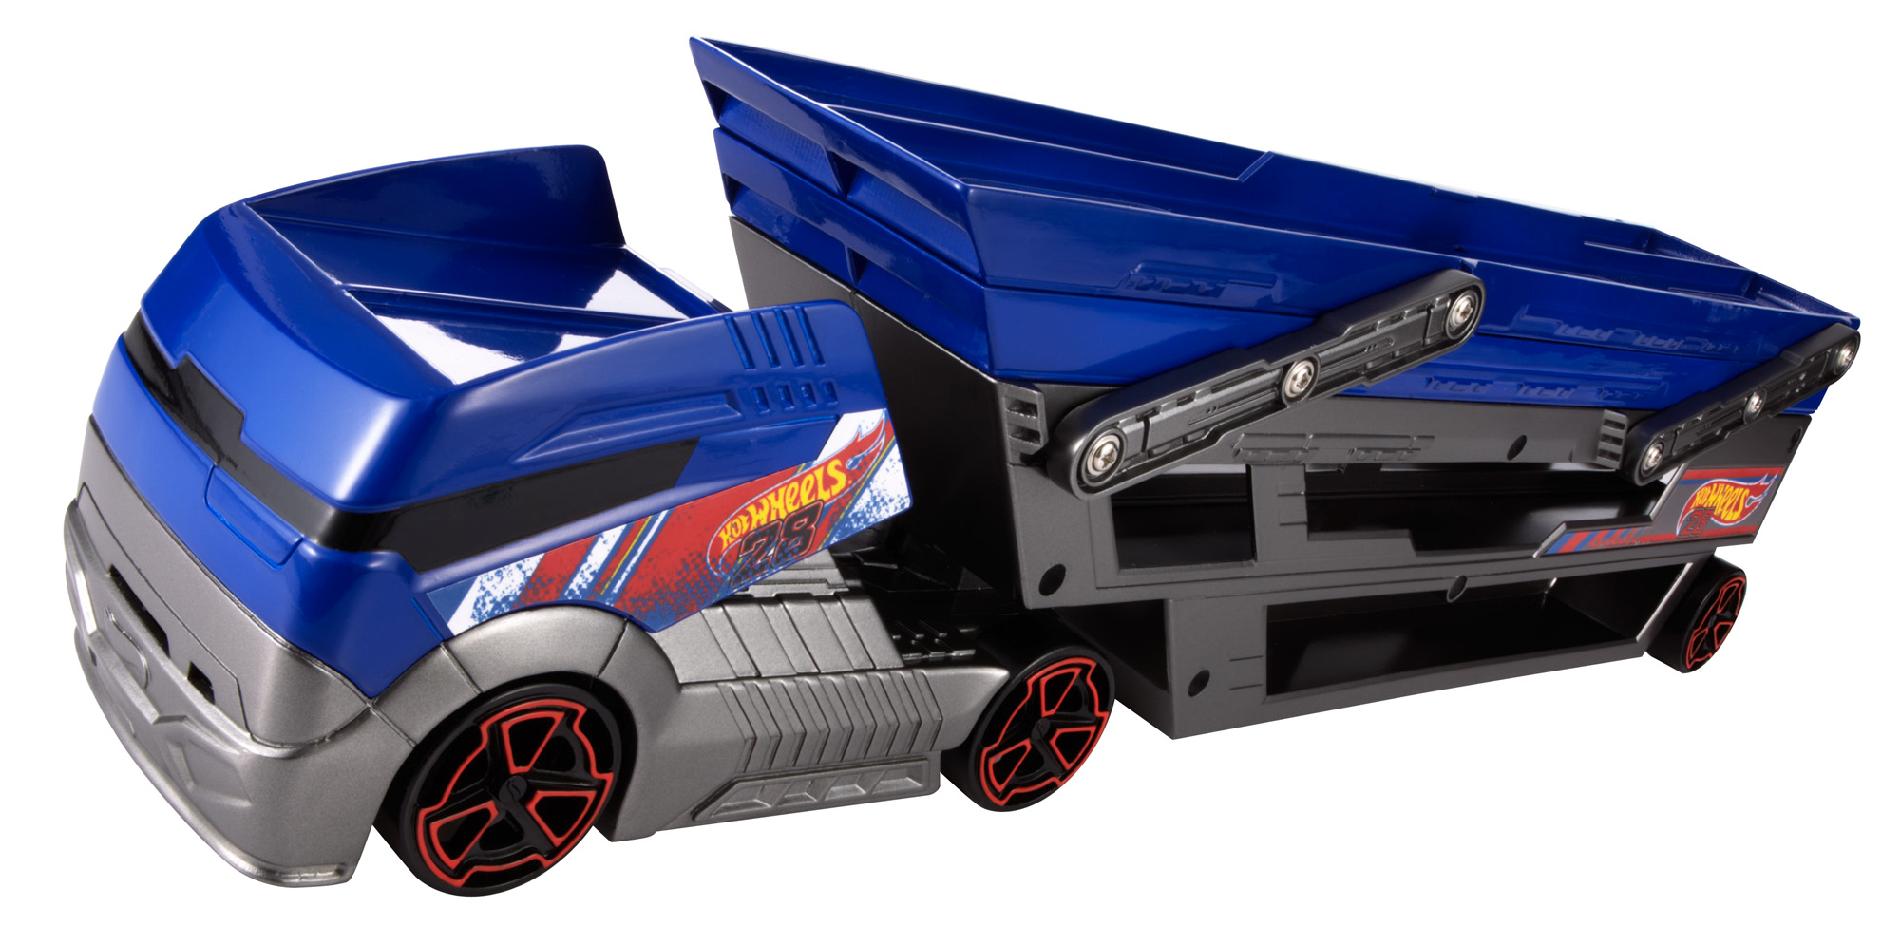 Hot Wheels Turbo Hauler Vehicle   Toys & Games   Vehicles & Remote